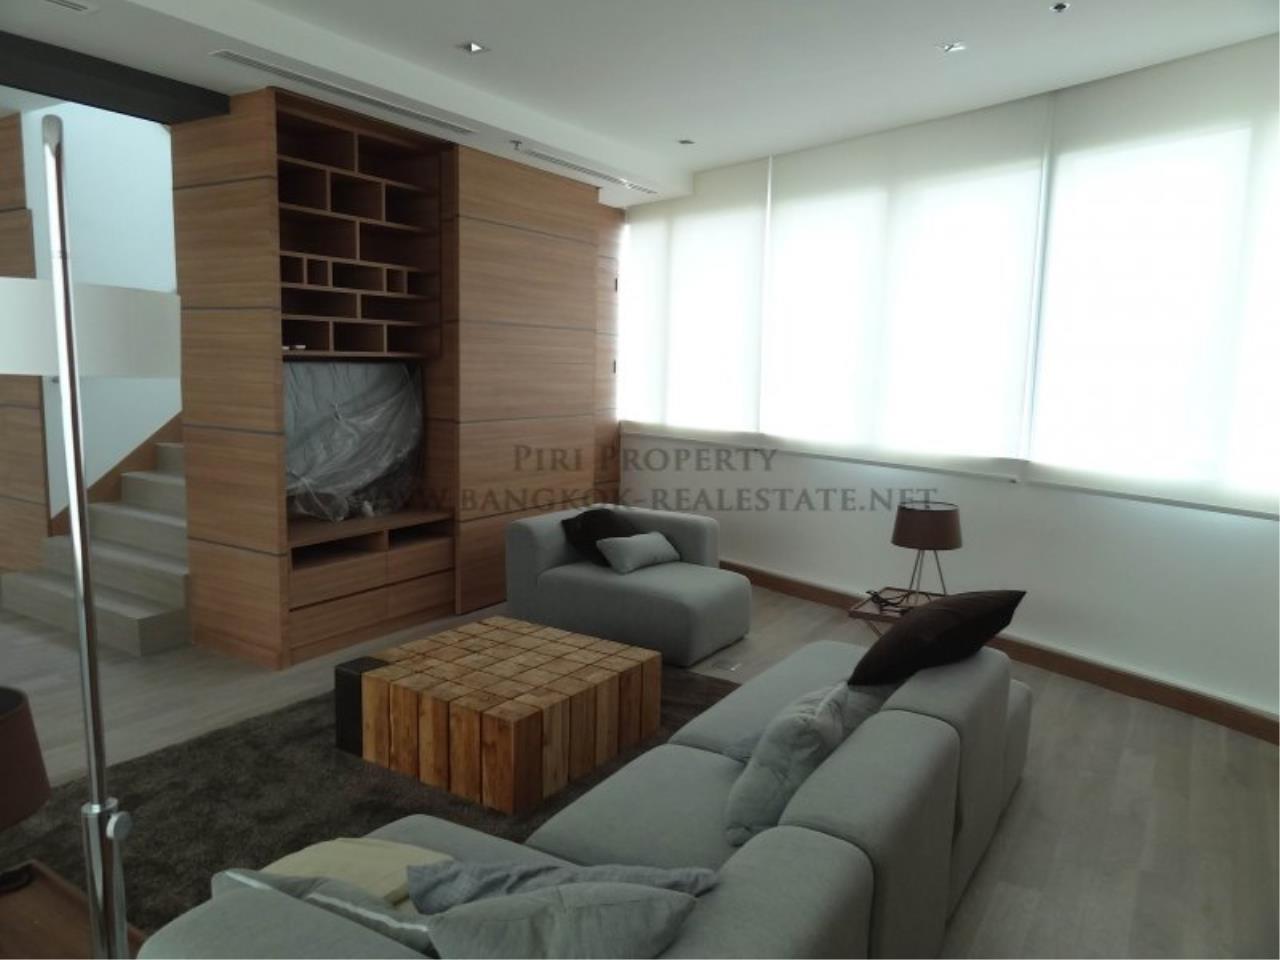 Piri Property Agency's Luxury Duplex Penthouse for Rent - Millennium Residence Sukhumvit 16-20 2